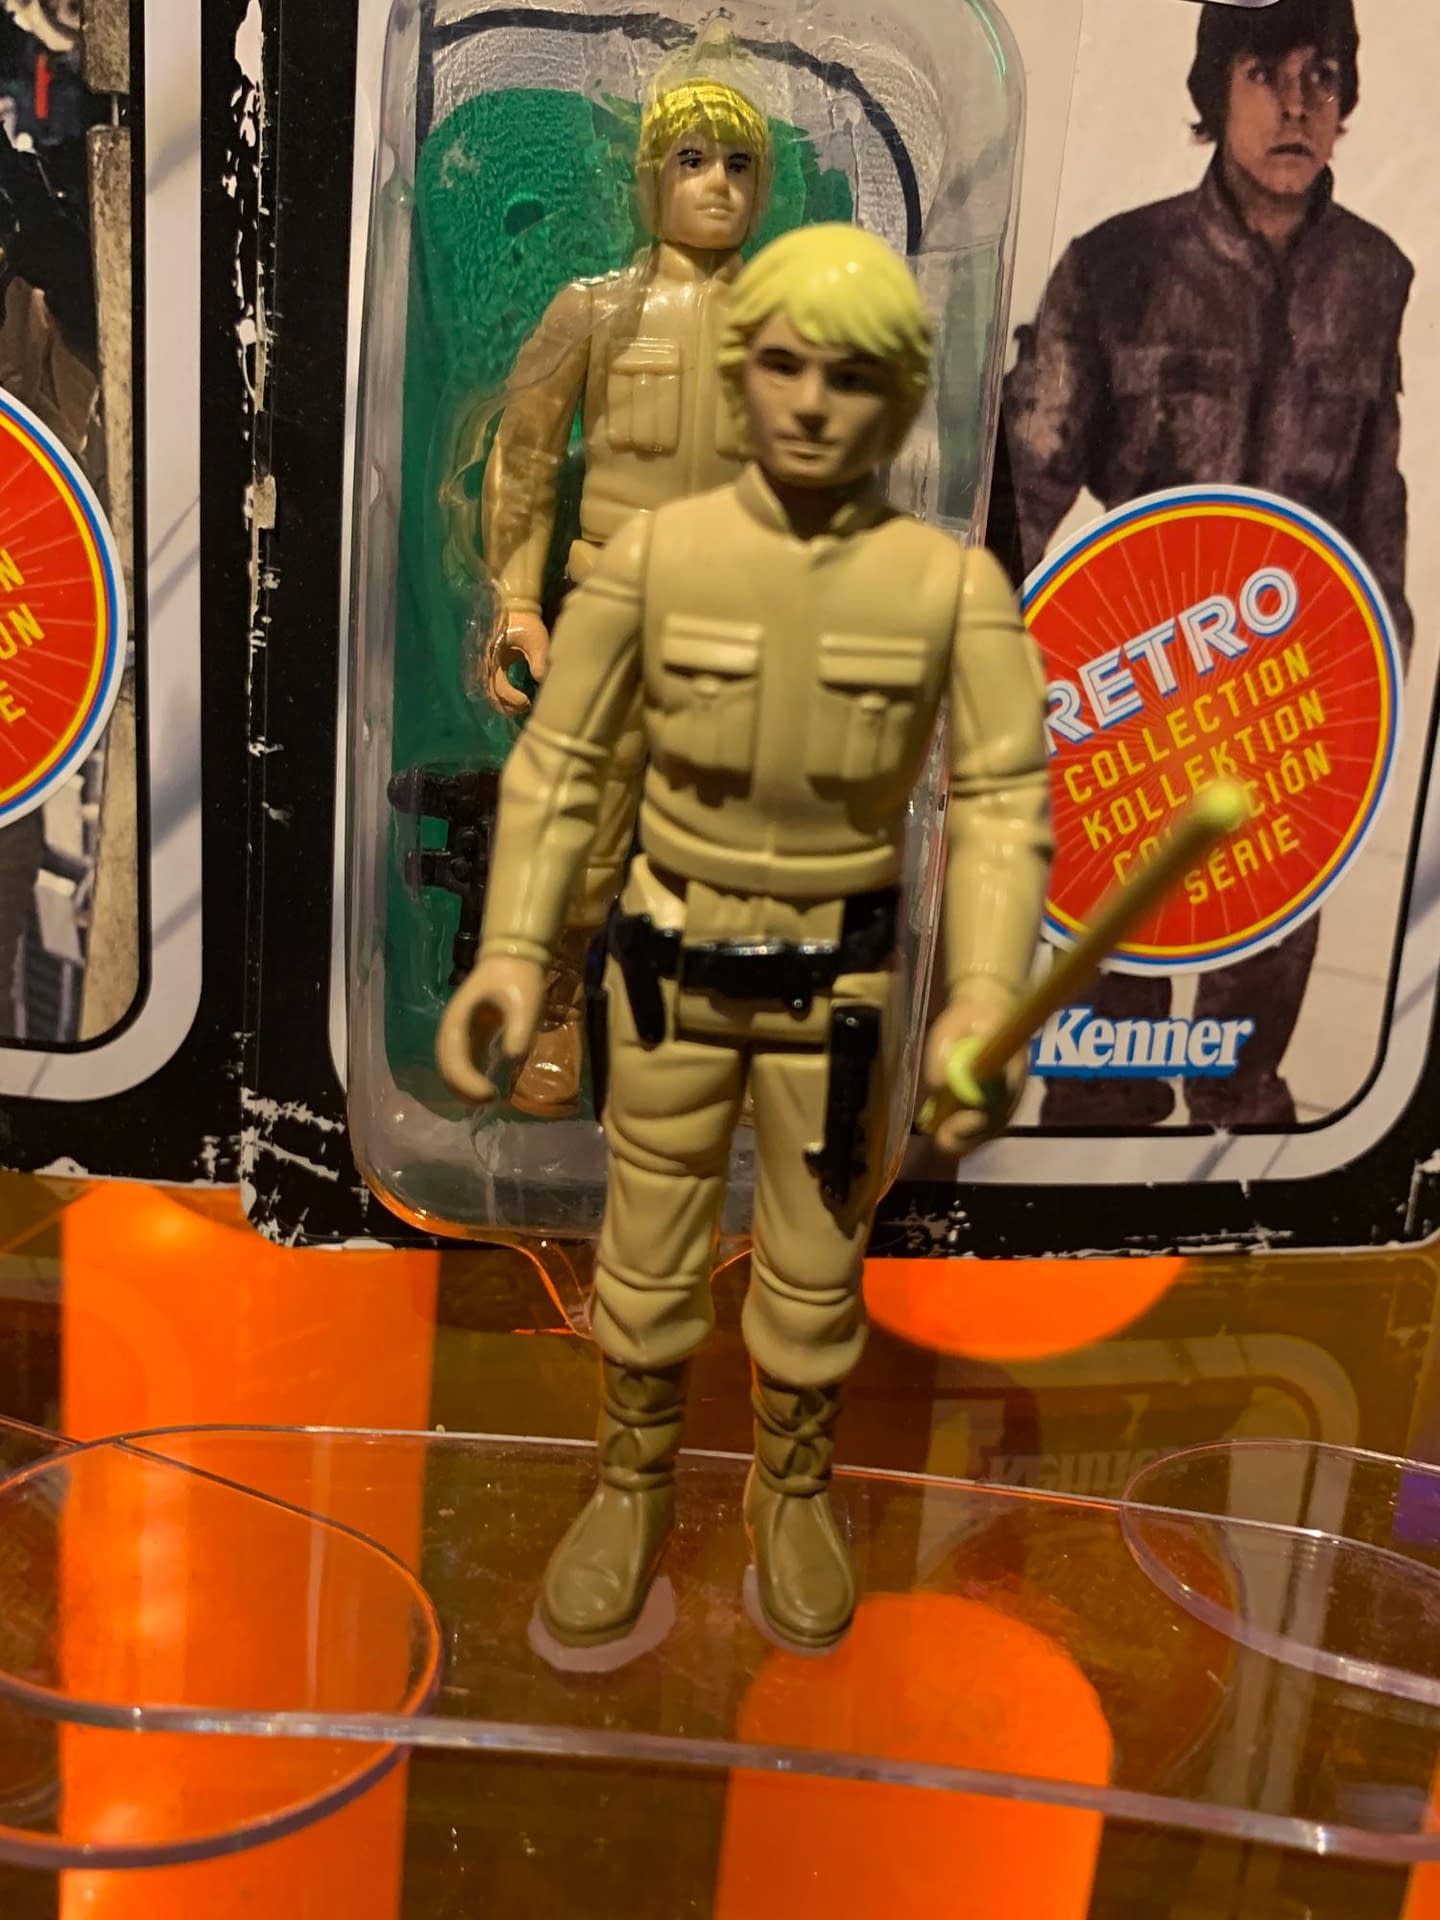 Hasbro New York Toy Fair 2020 - 38 Photos of Star Wars 